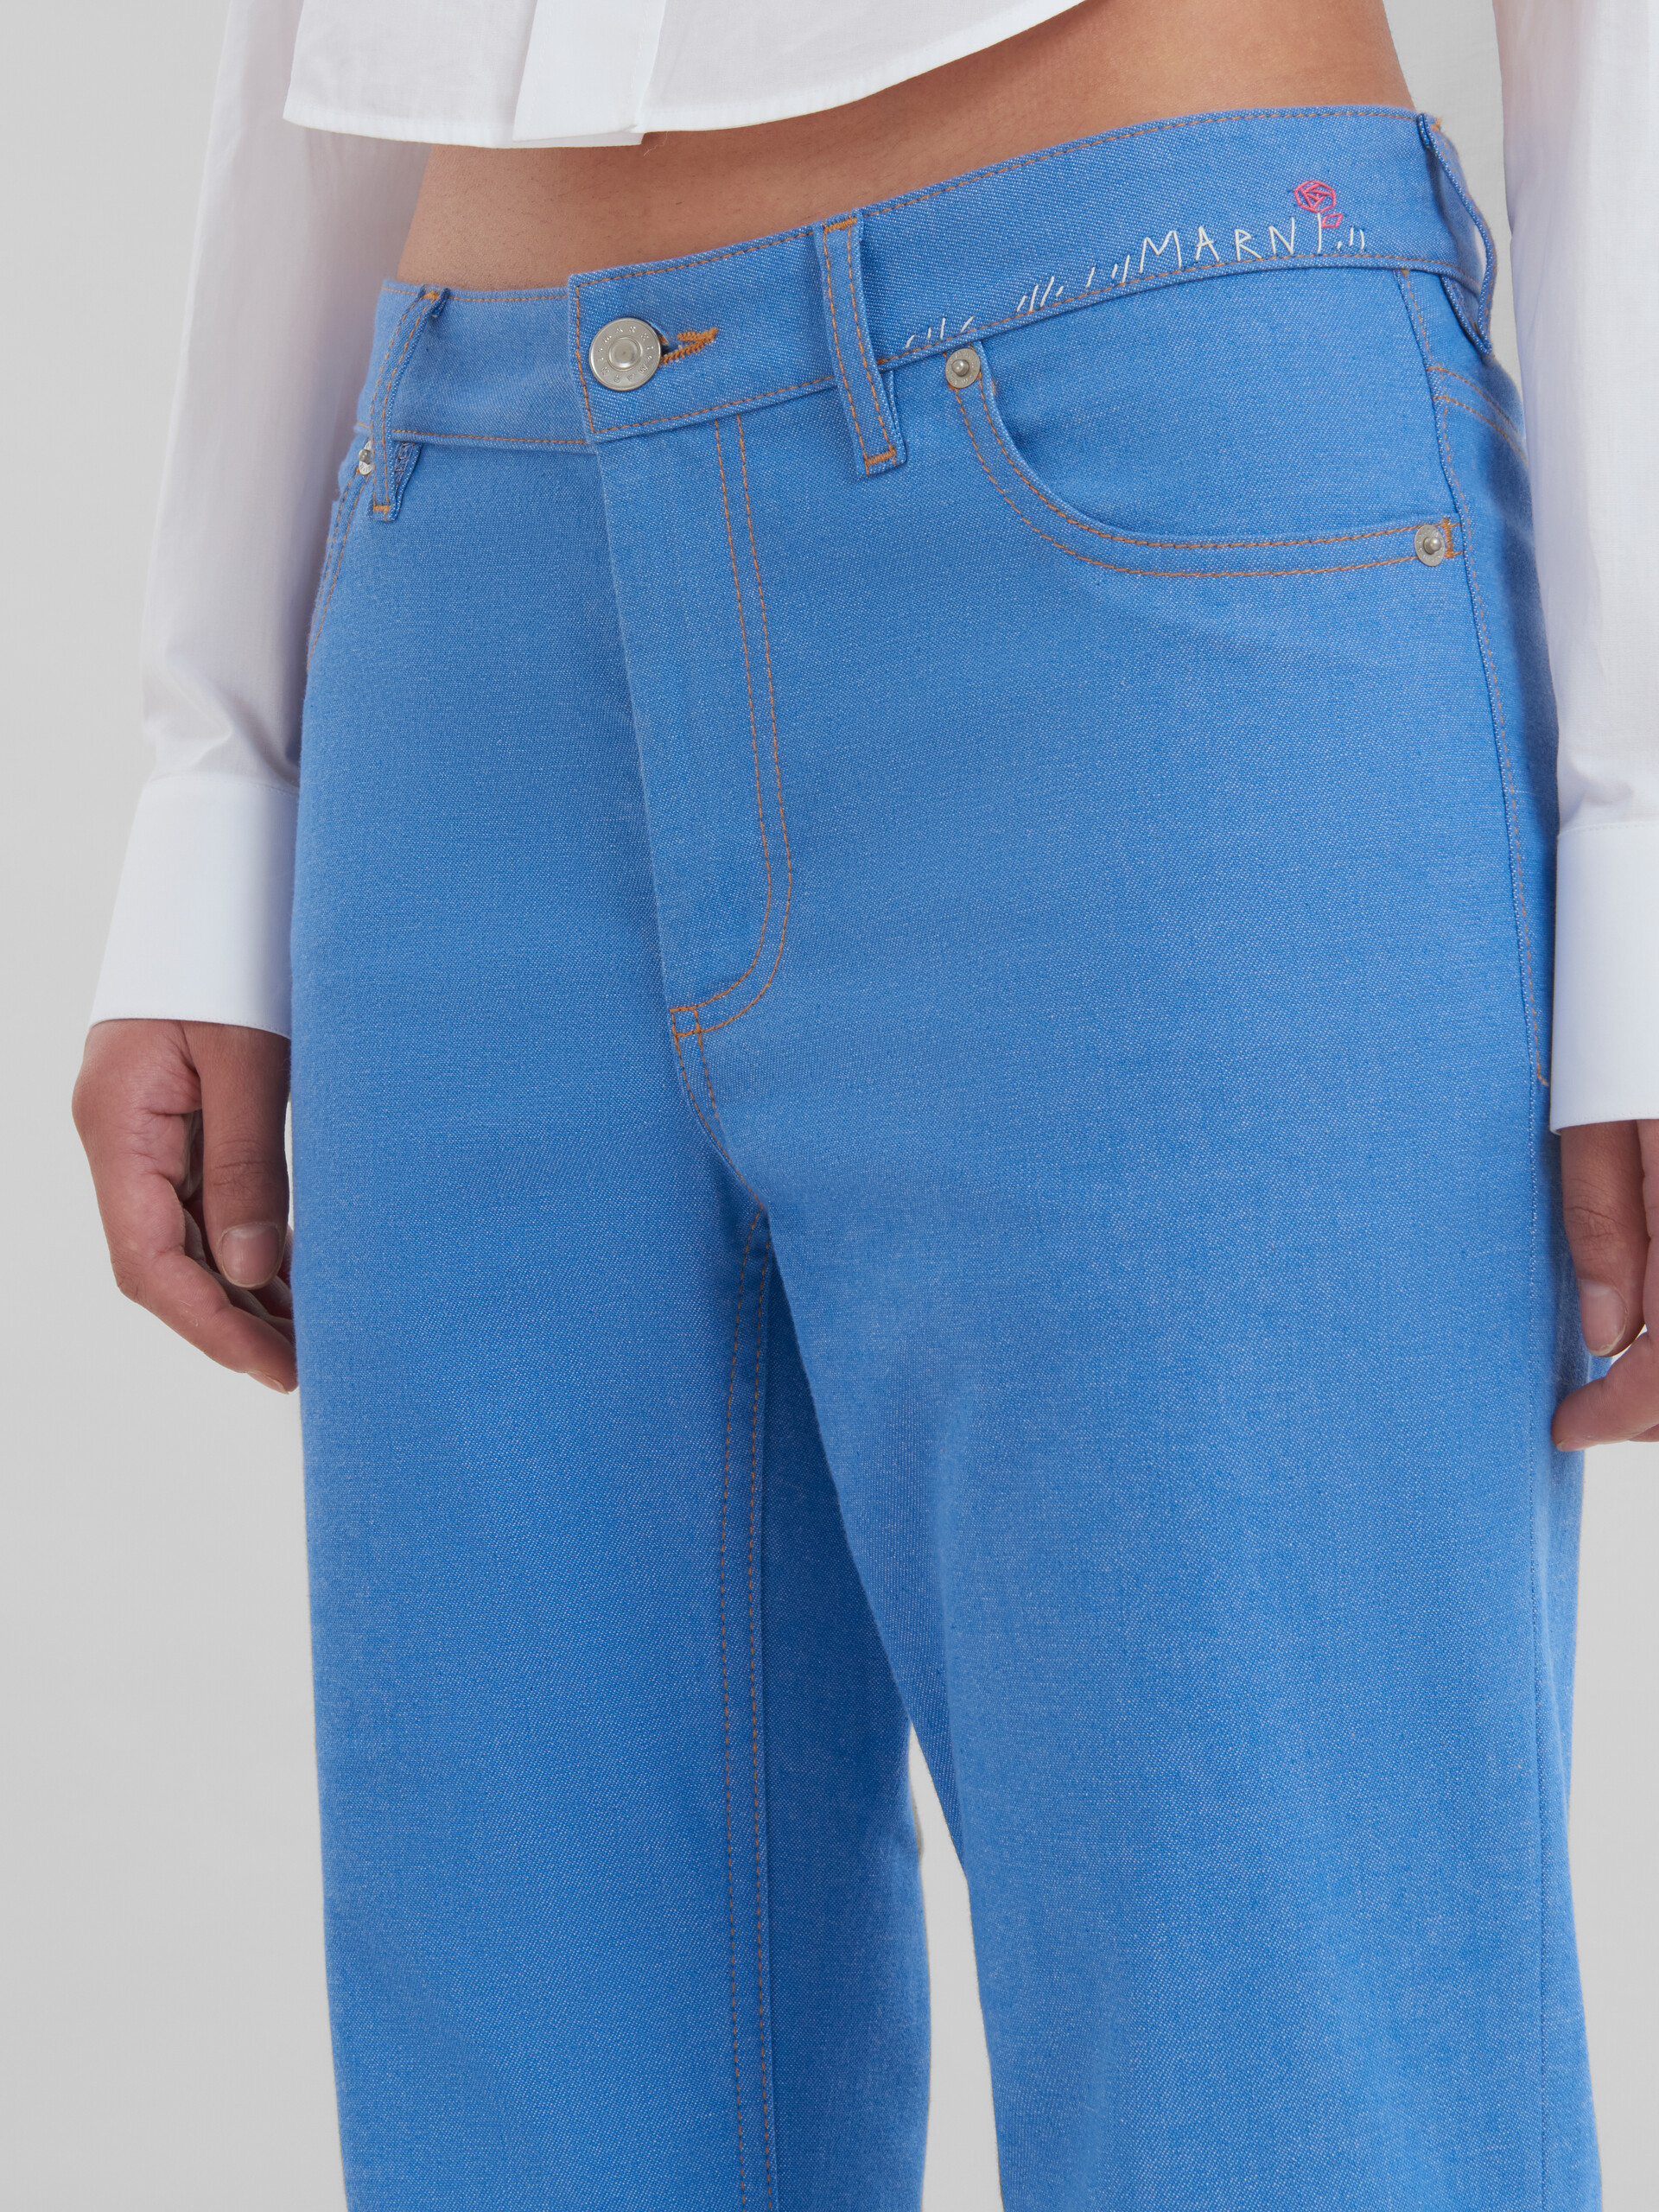 Pantaloni a zampa in denim stretch blu - Pantaloni - Image 4